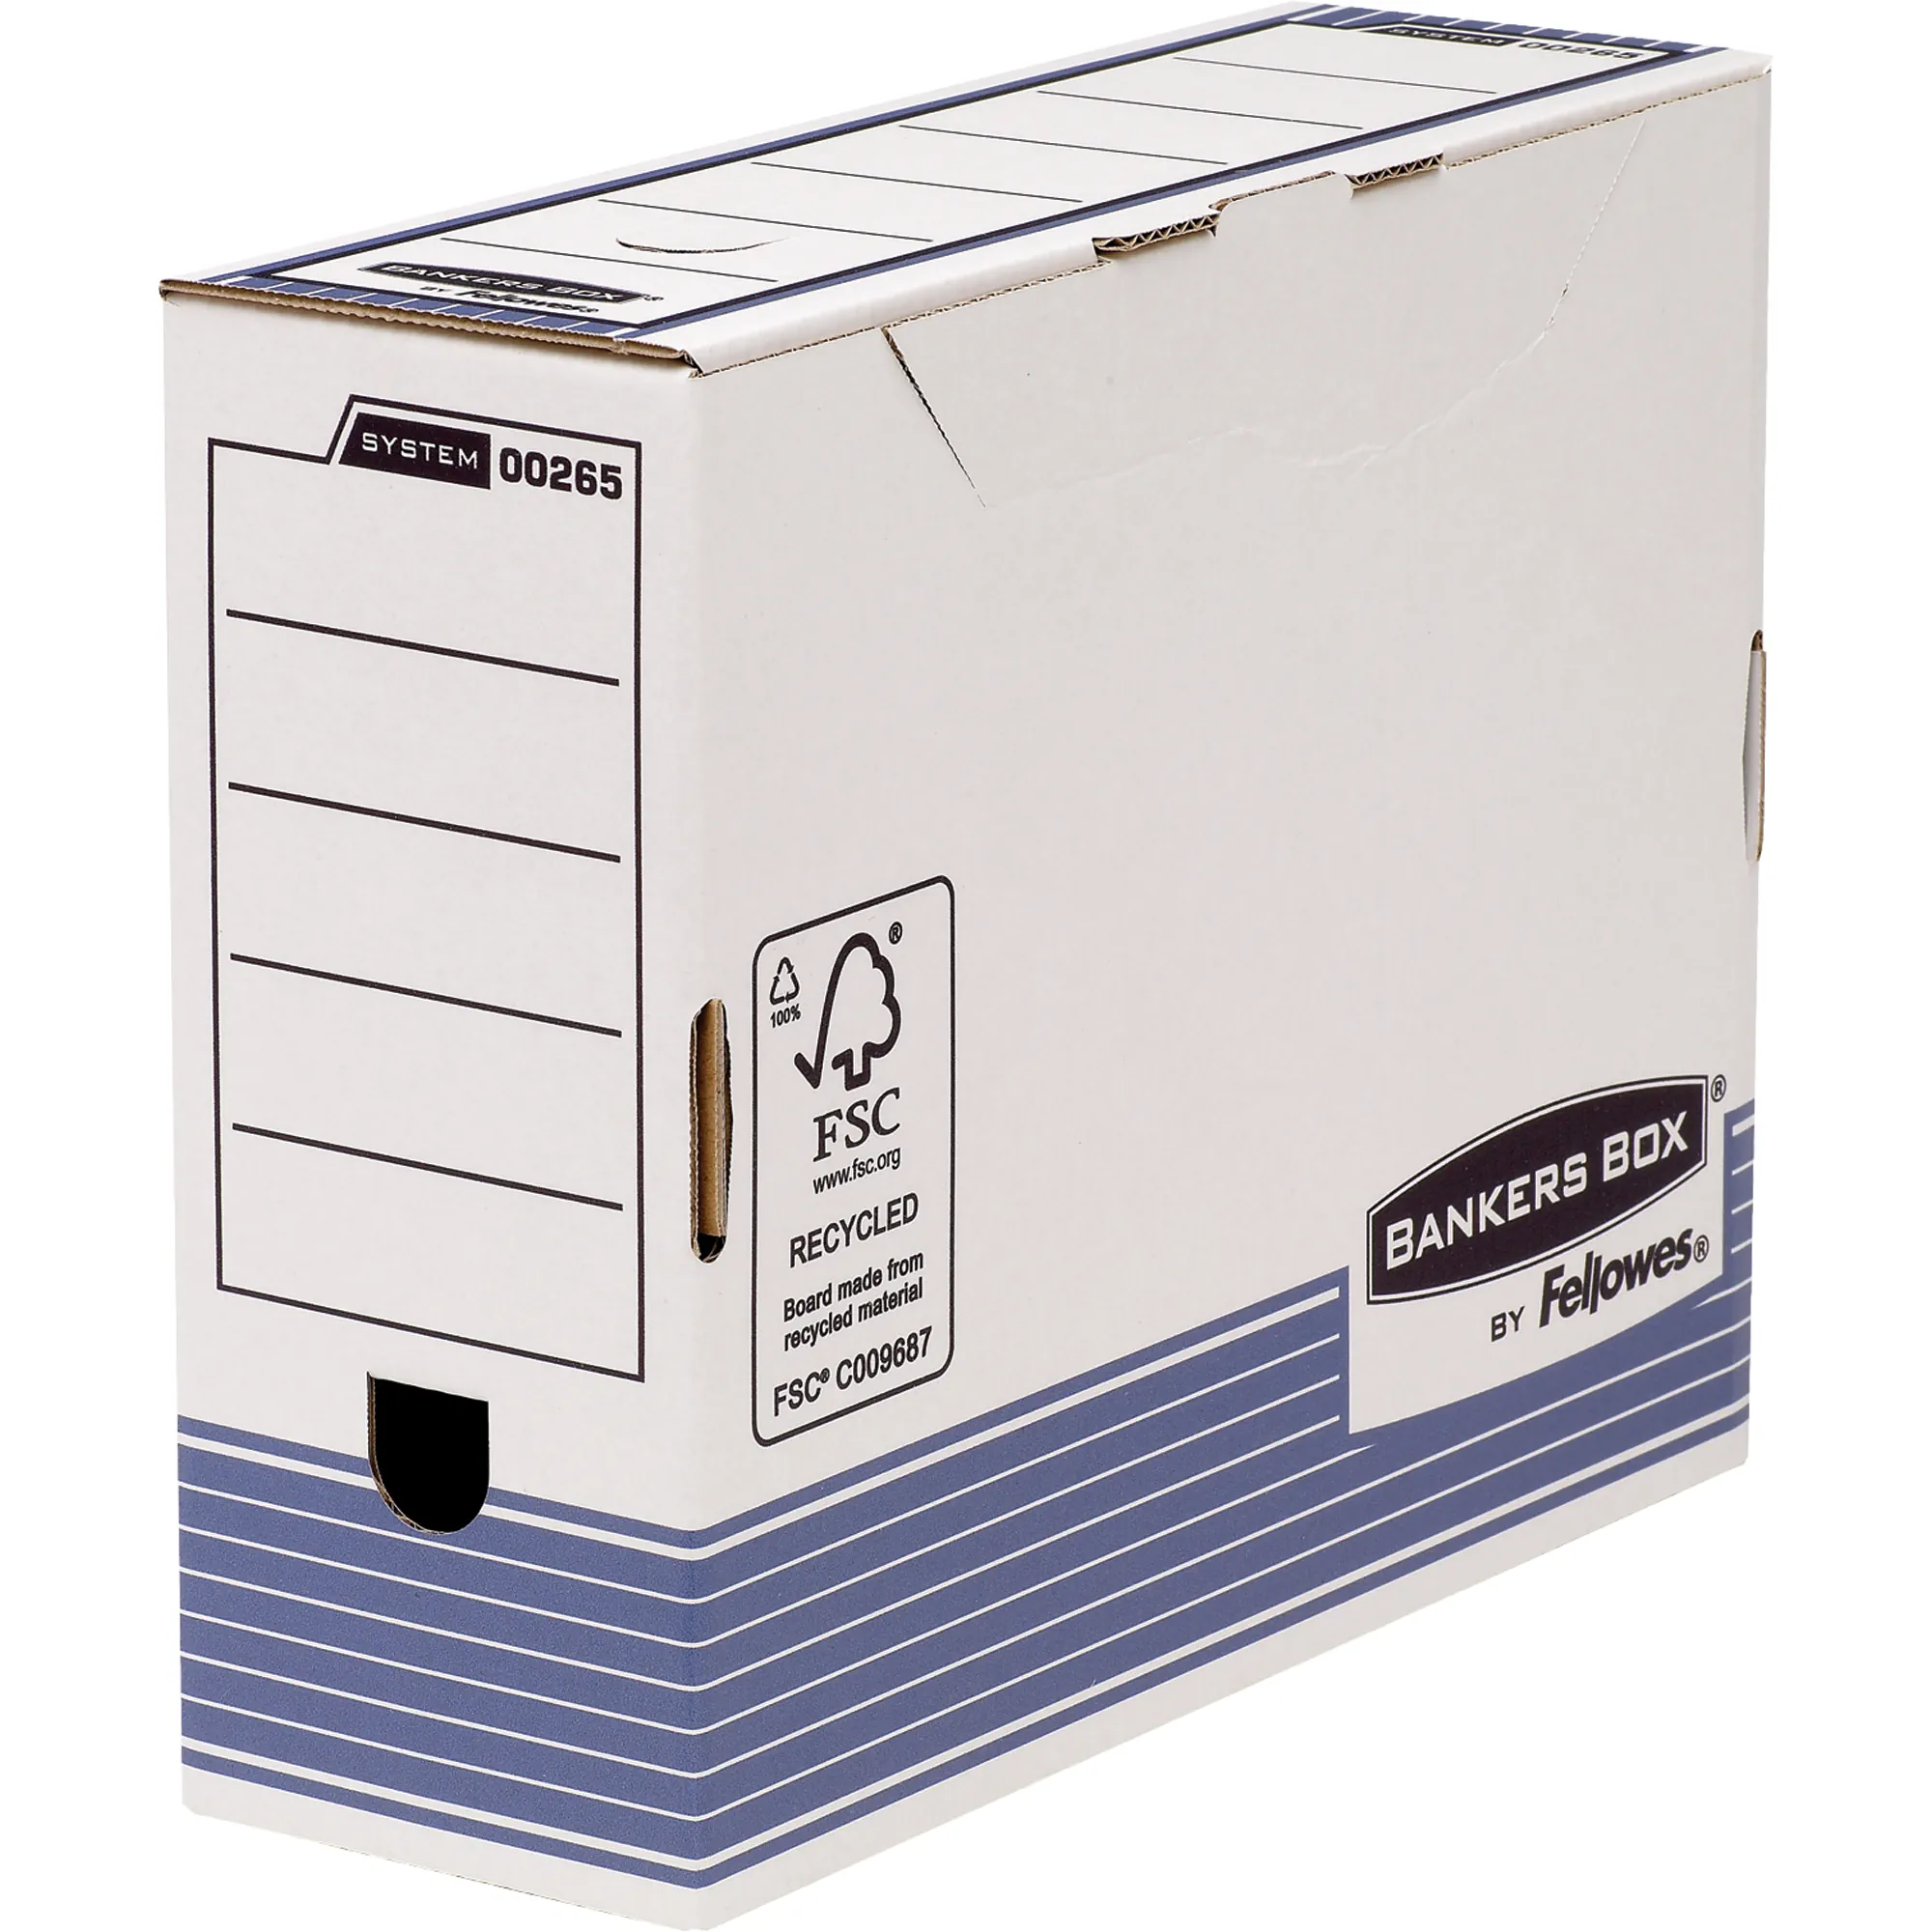 BANKERS BOX Archivbox System weiß, blau 8,5 x 32,7 x 26,5 cm